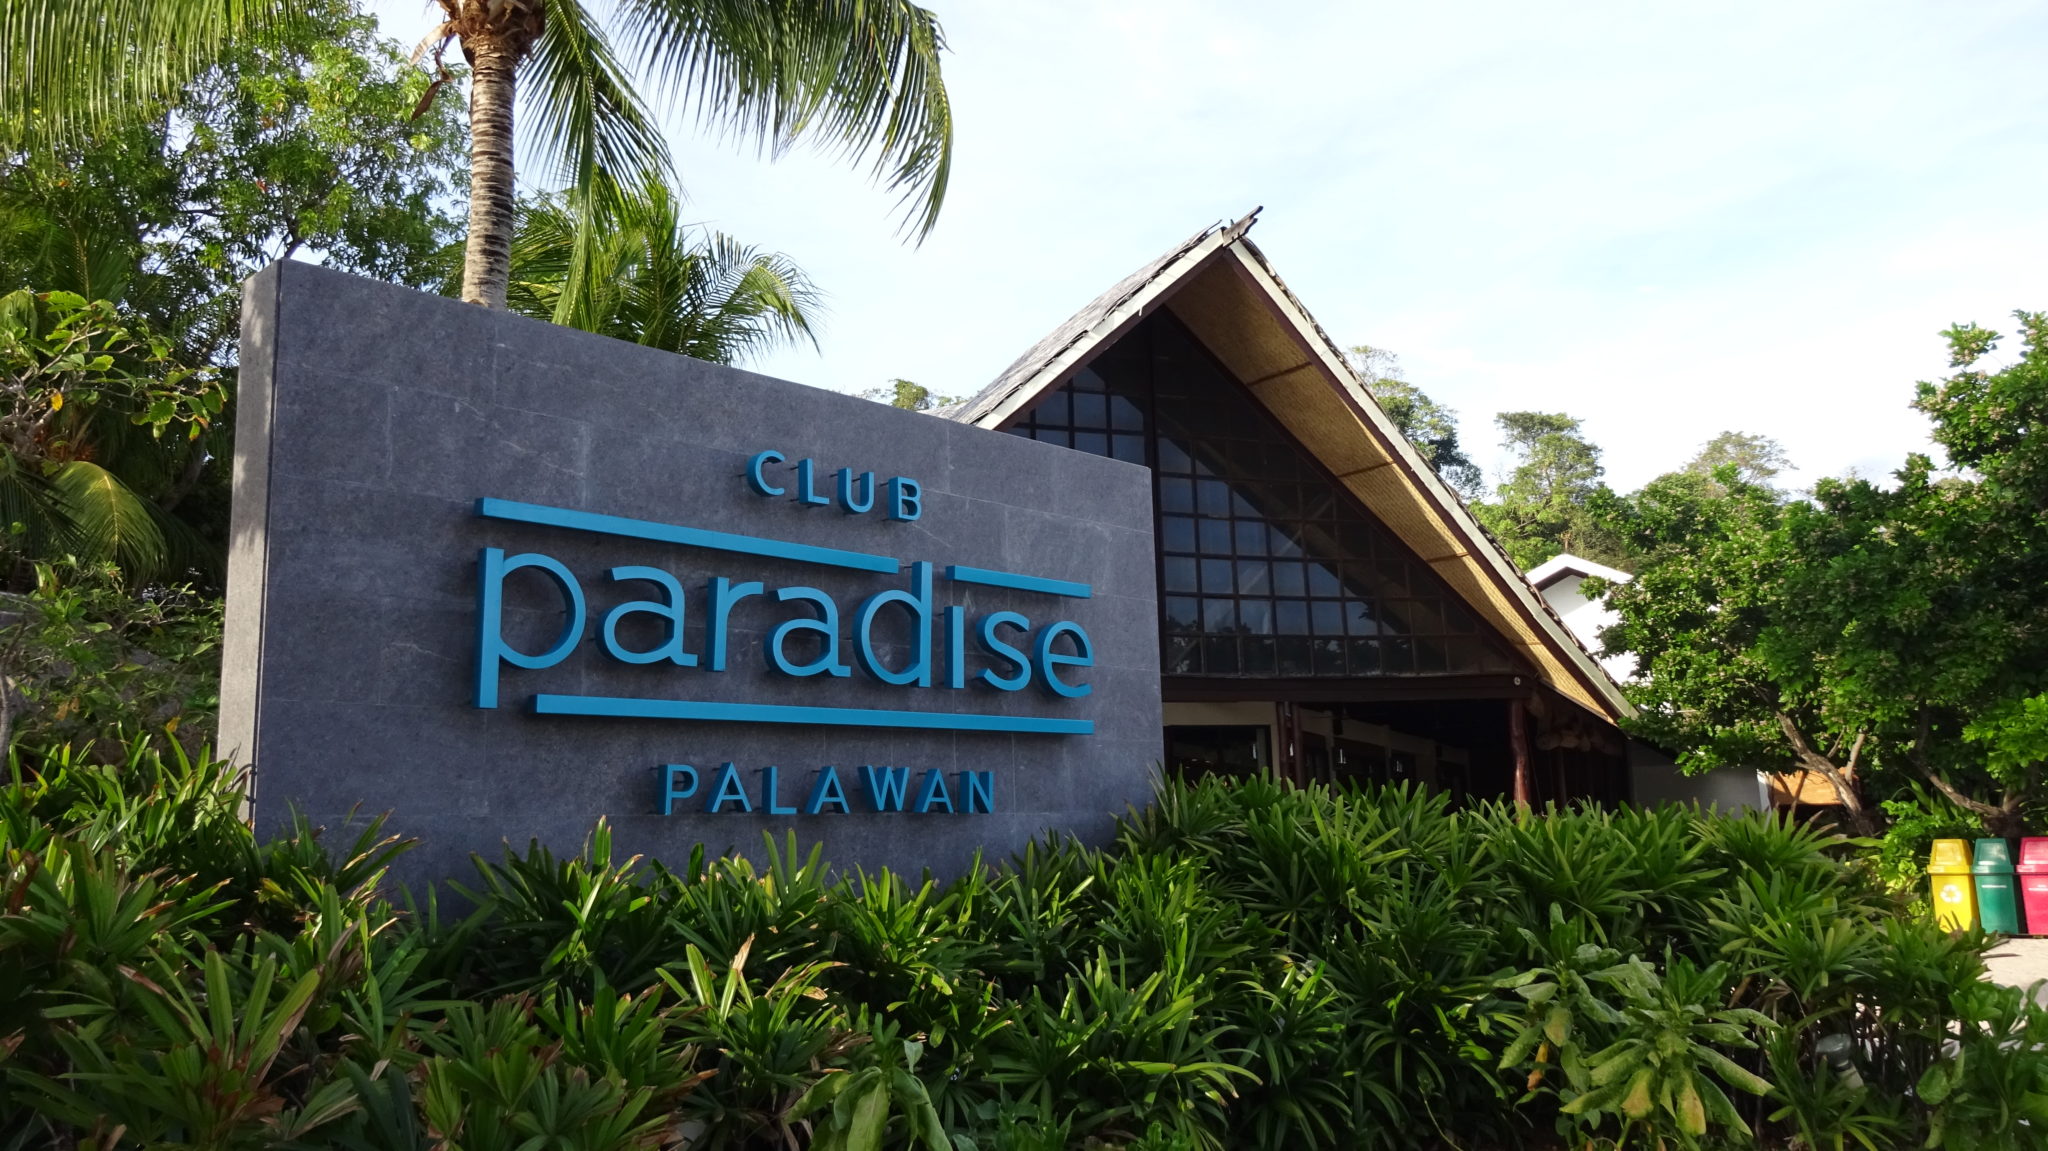 Club Paradise Palawan - Sign